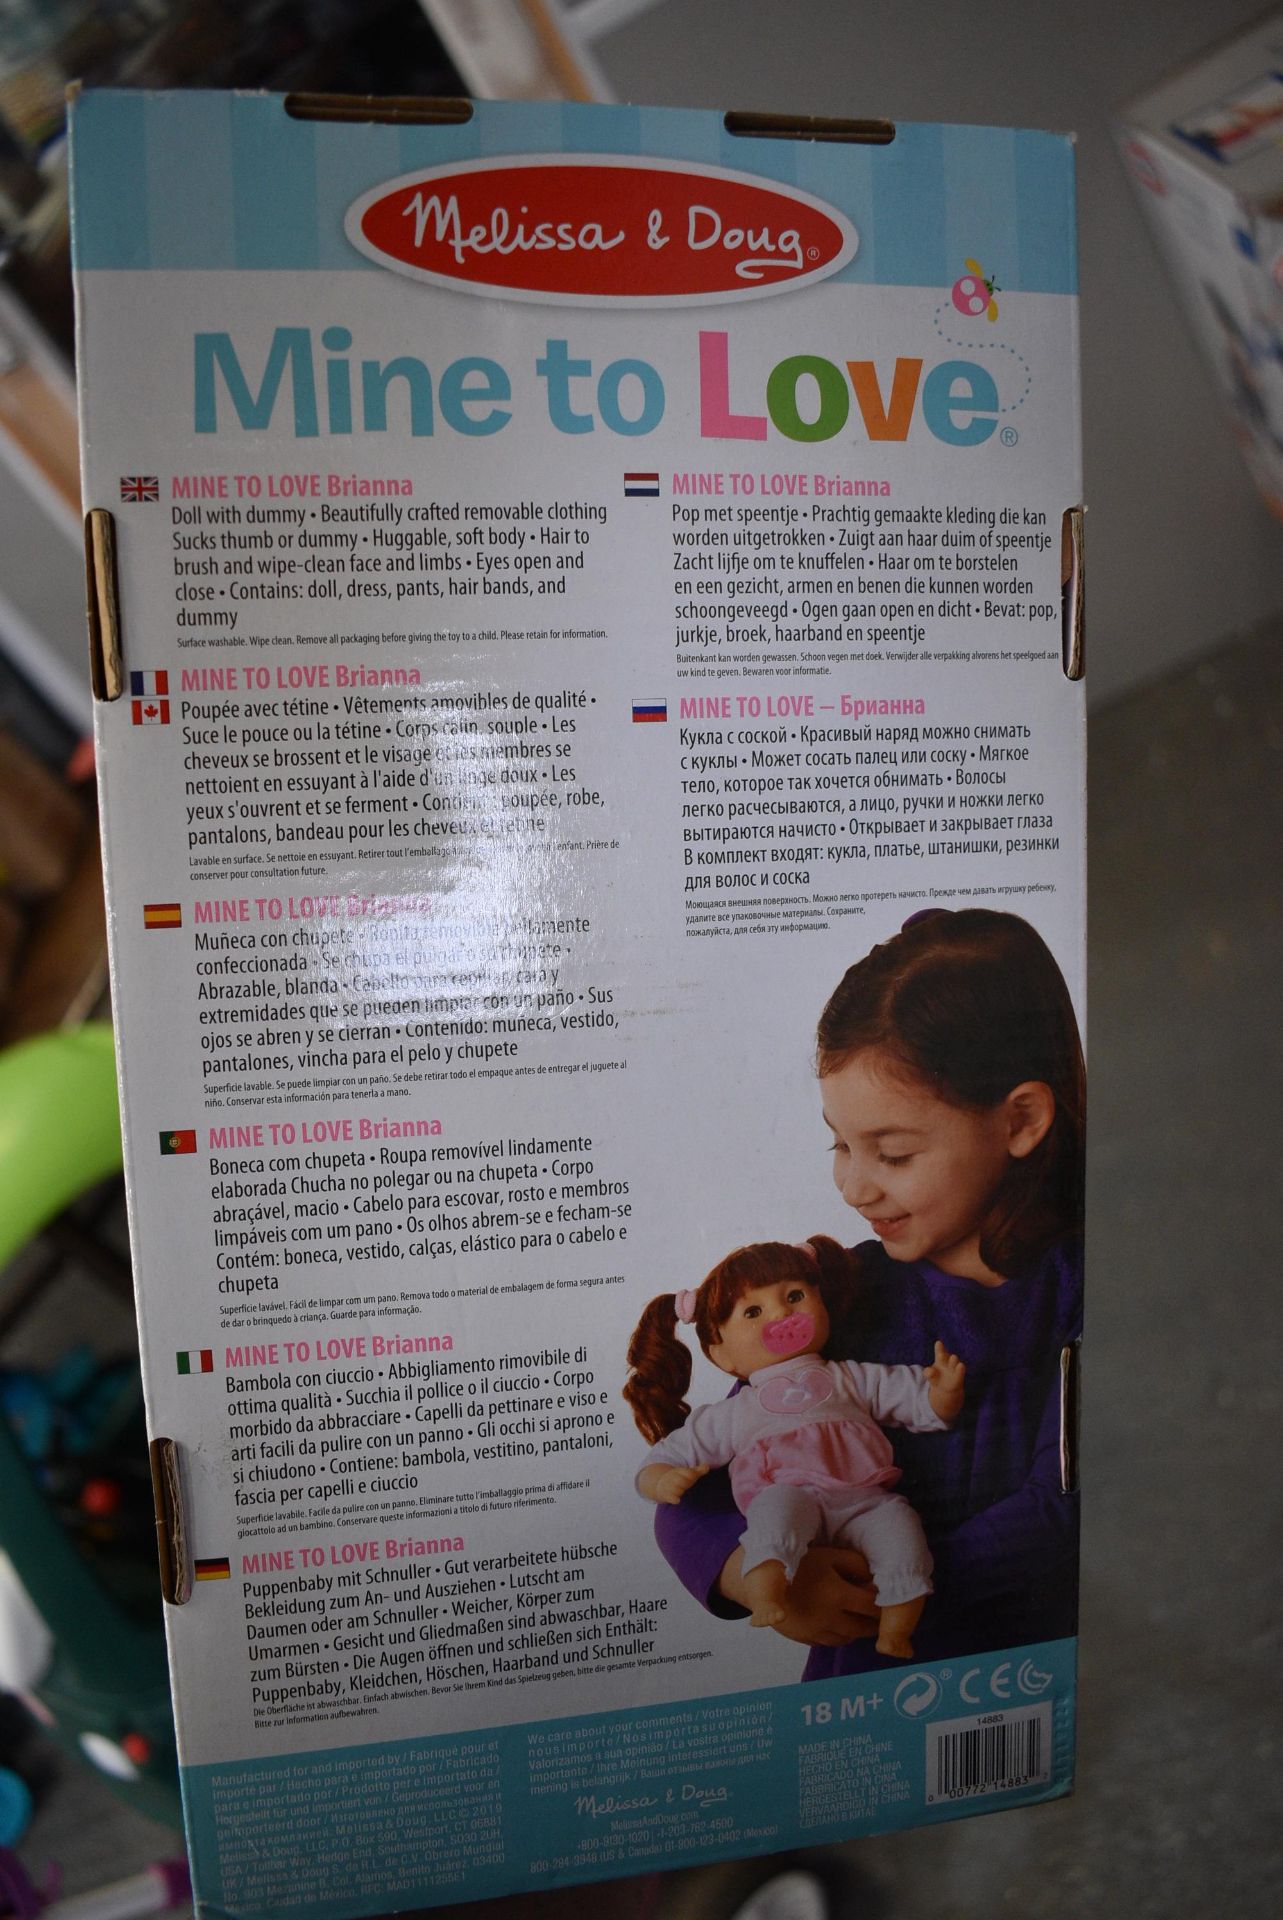 Melissa & Doug Mine to Love Brianna Doll - Image 3 of 4